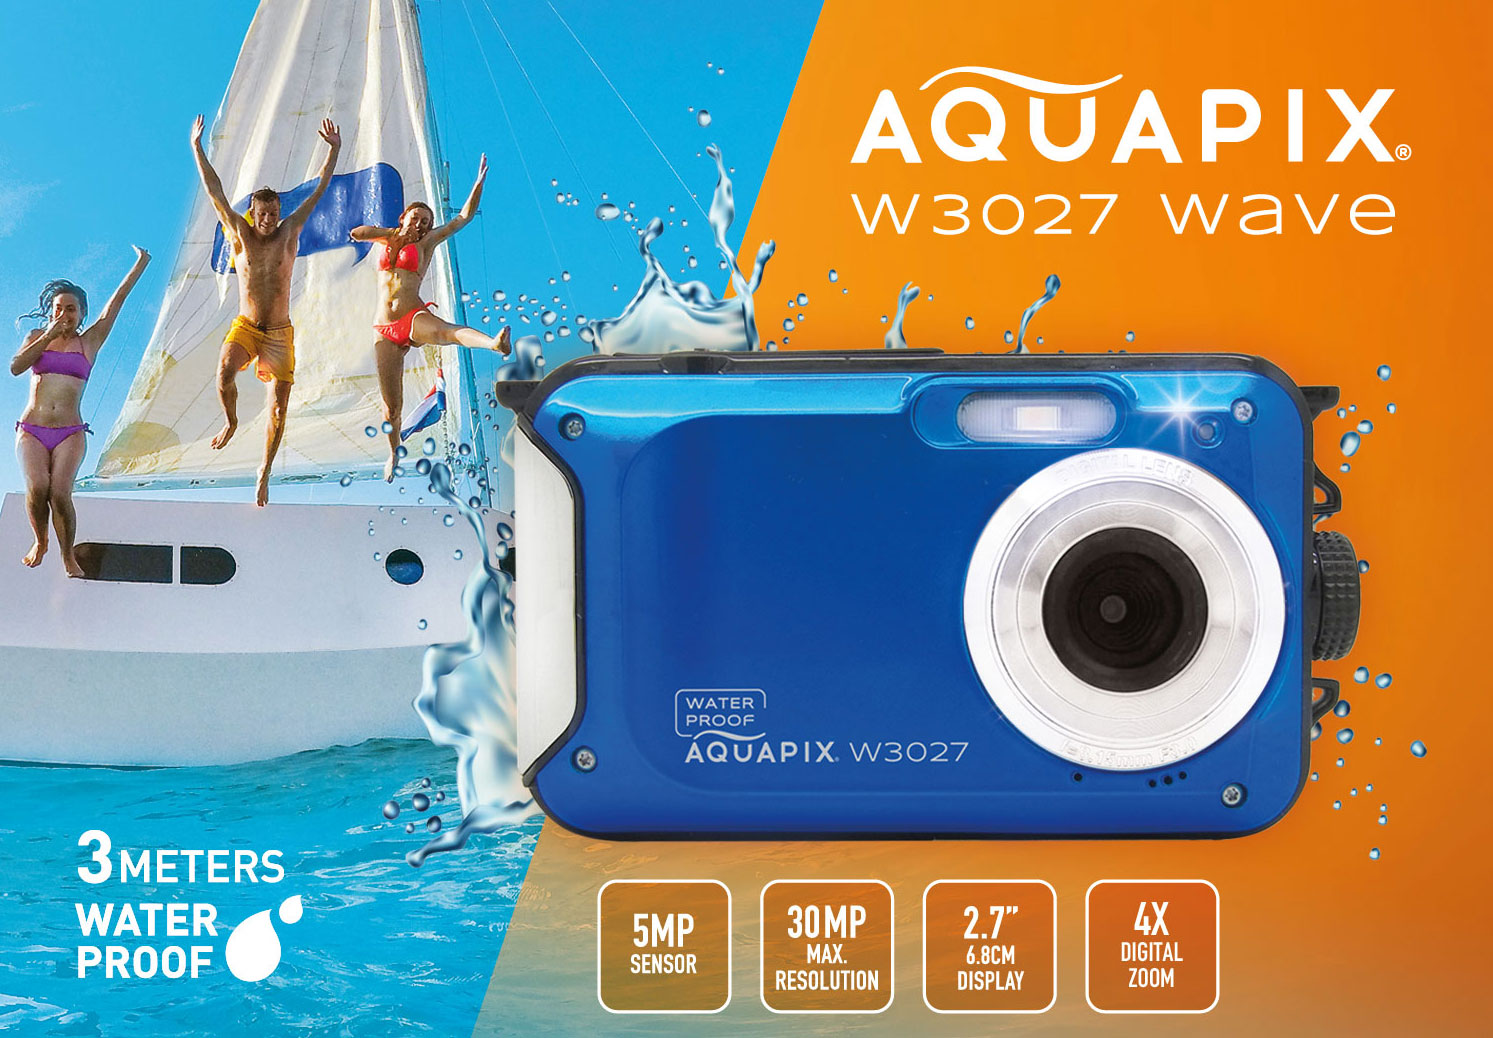 Aquapix W3027 Wave